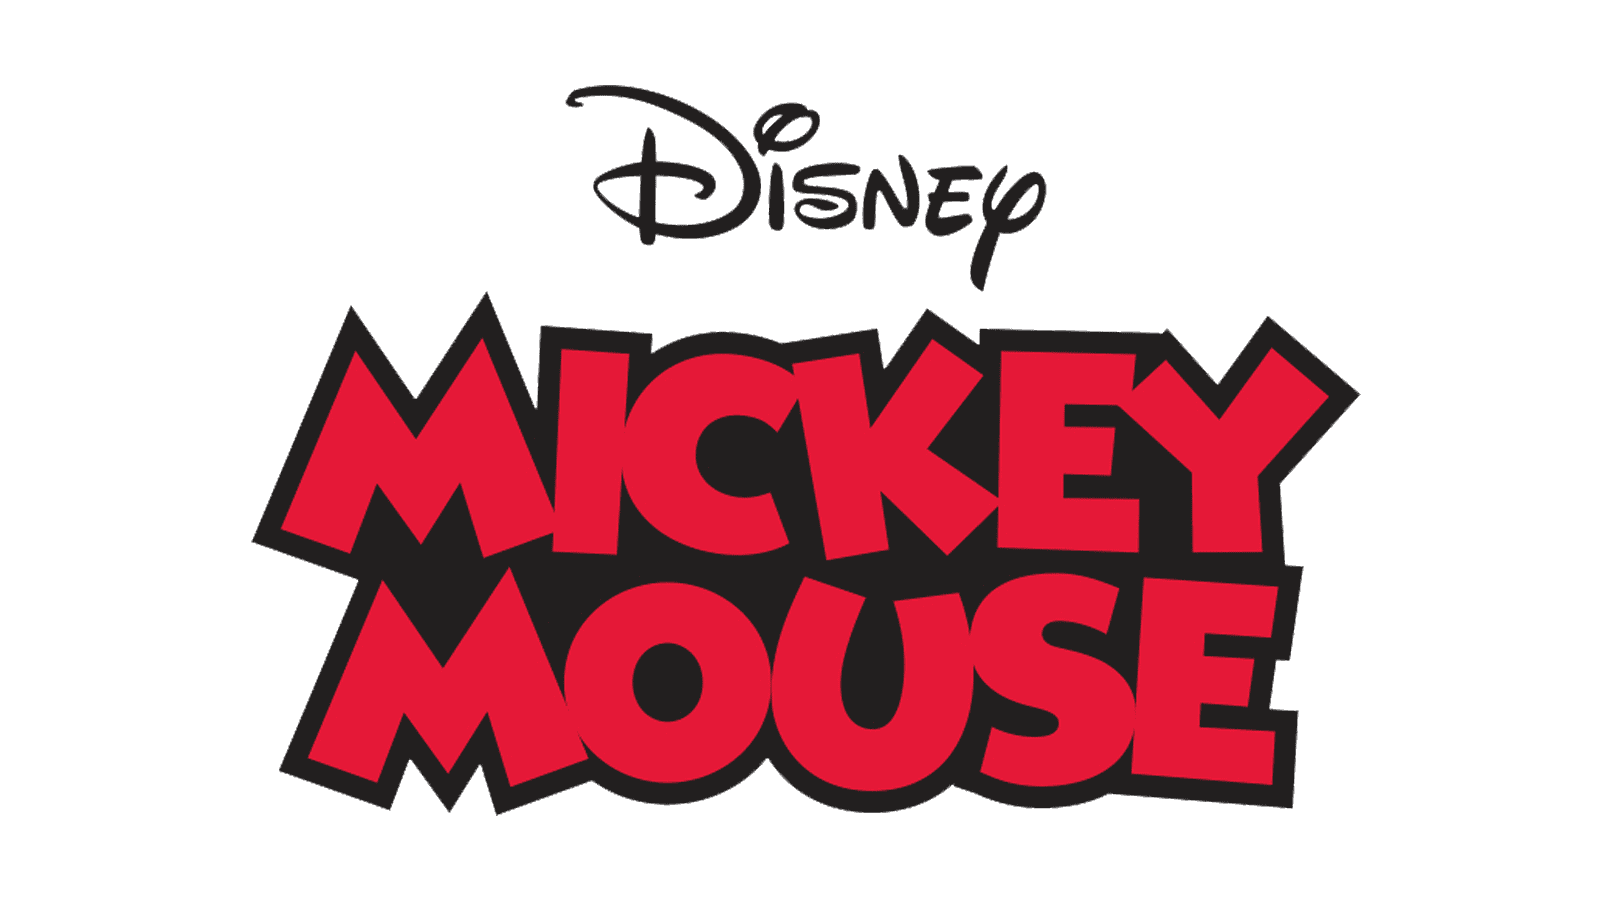 MIckey Mouse logo